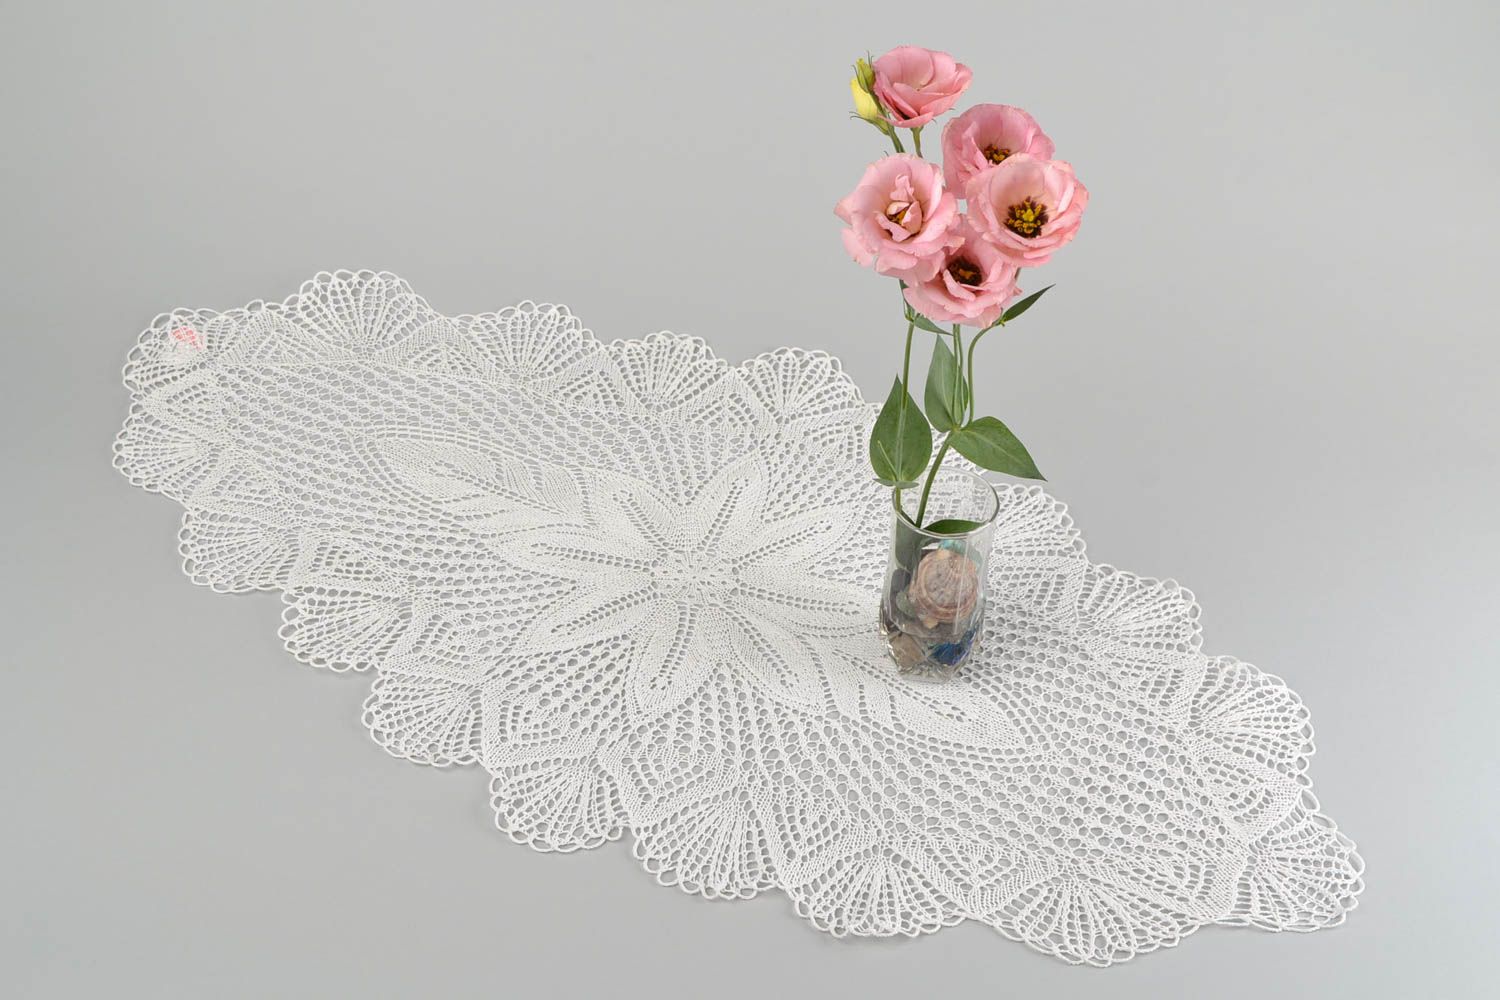 Handmade crocheted napkin knitted napkin for table home textiles interior ideas photo 1